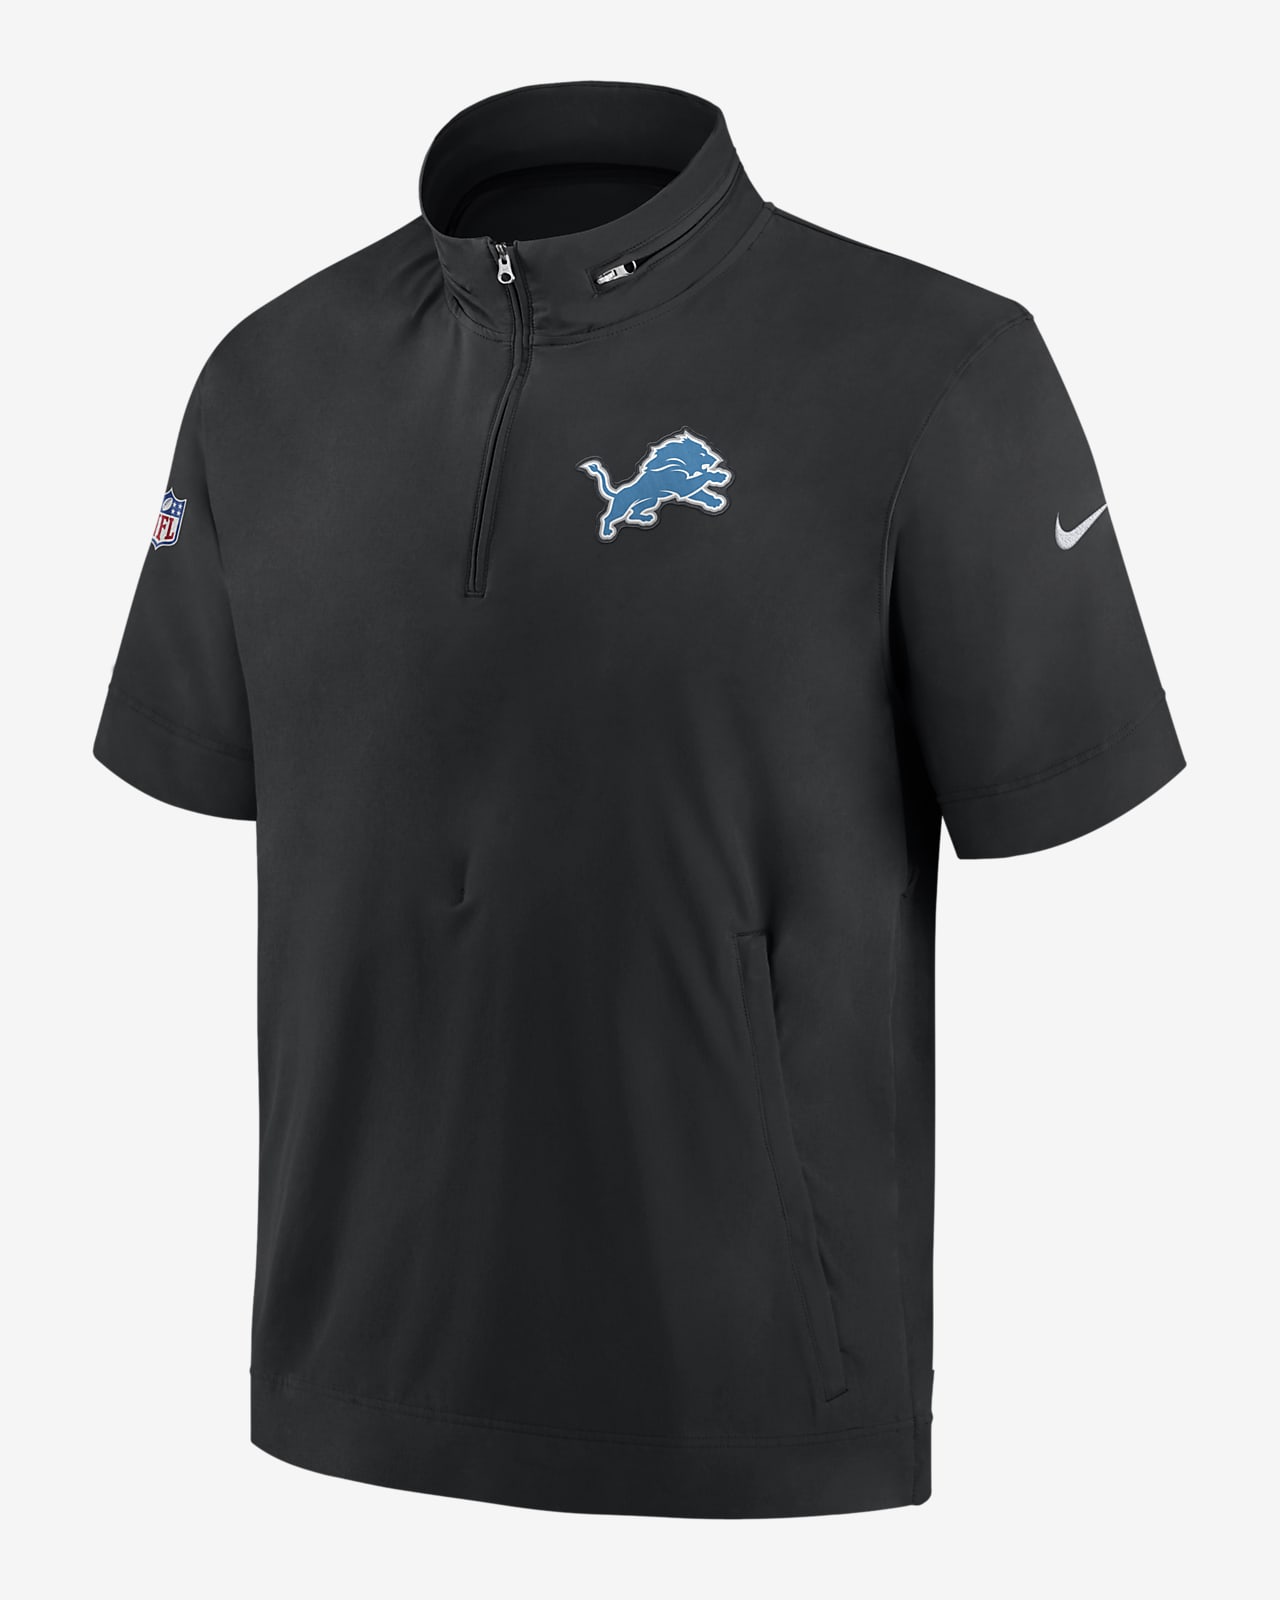 Nike Sideline Coach (NFL Detroit Lions) Men's Short-Sleeve Jacket